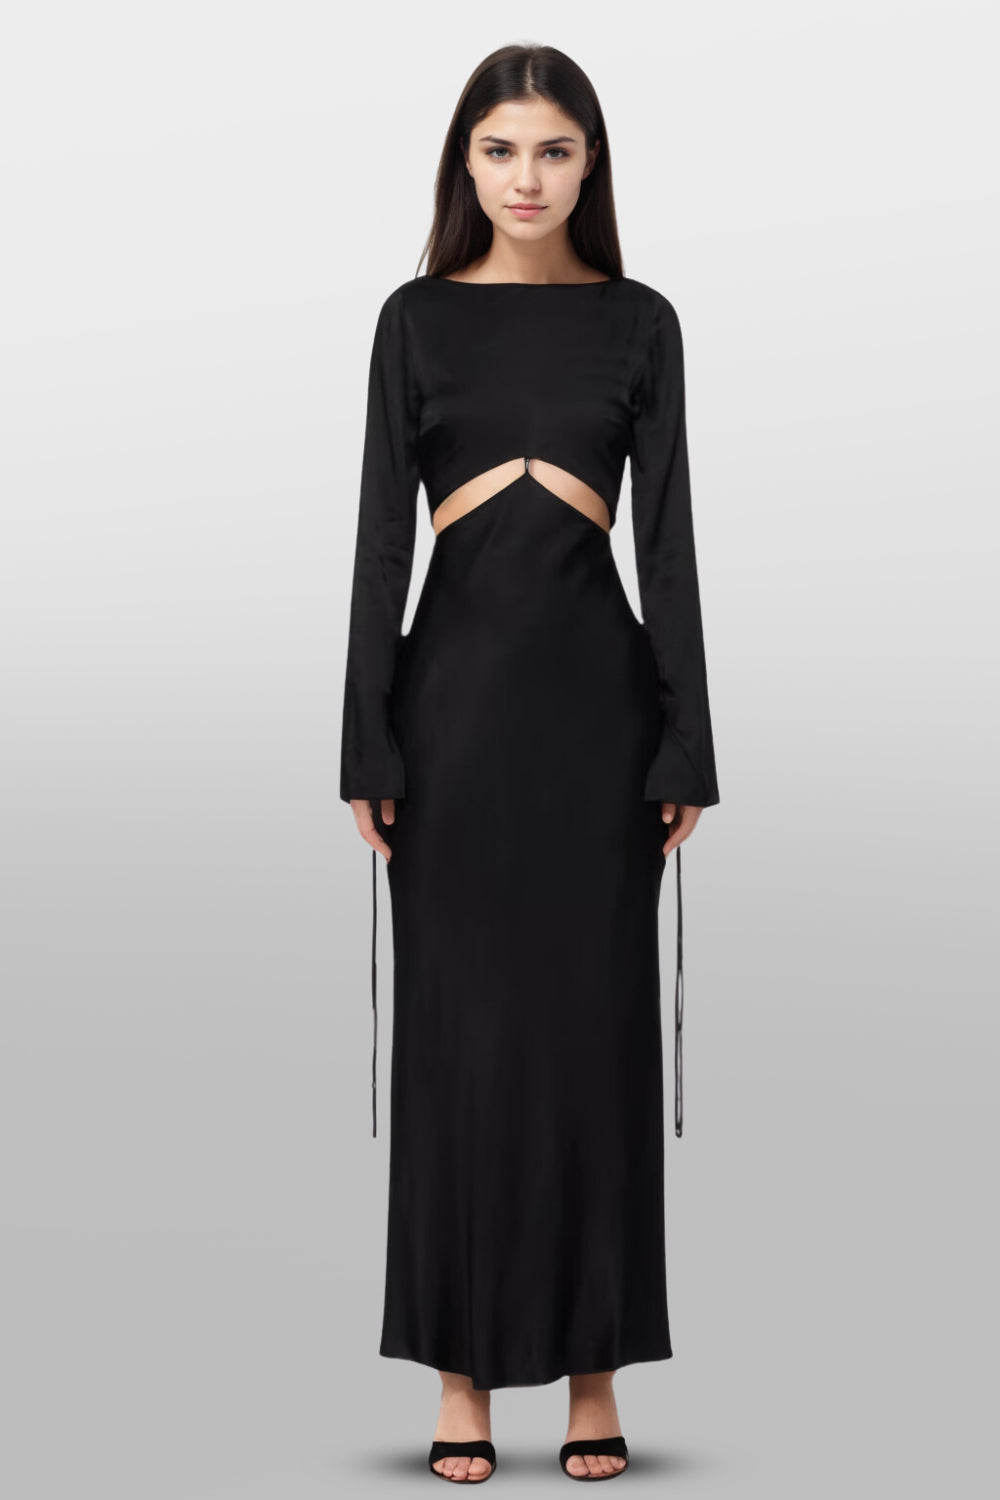 Sherbrooke Black Dress